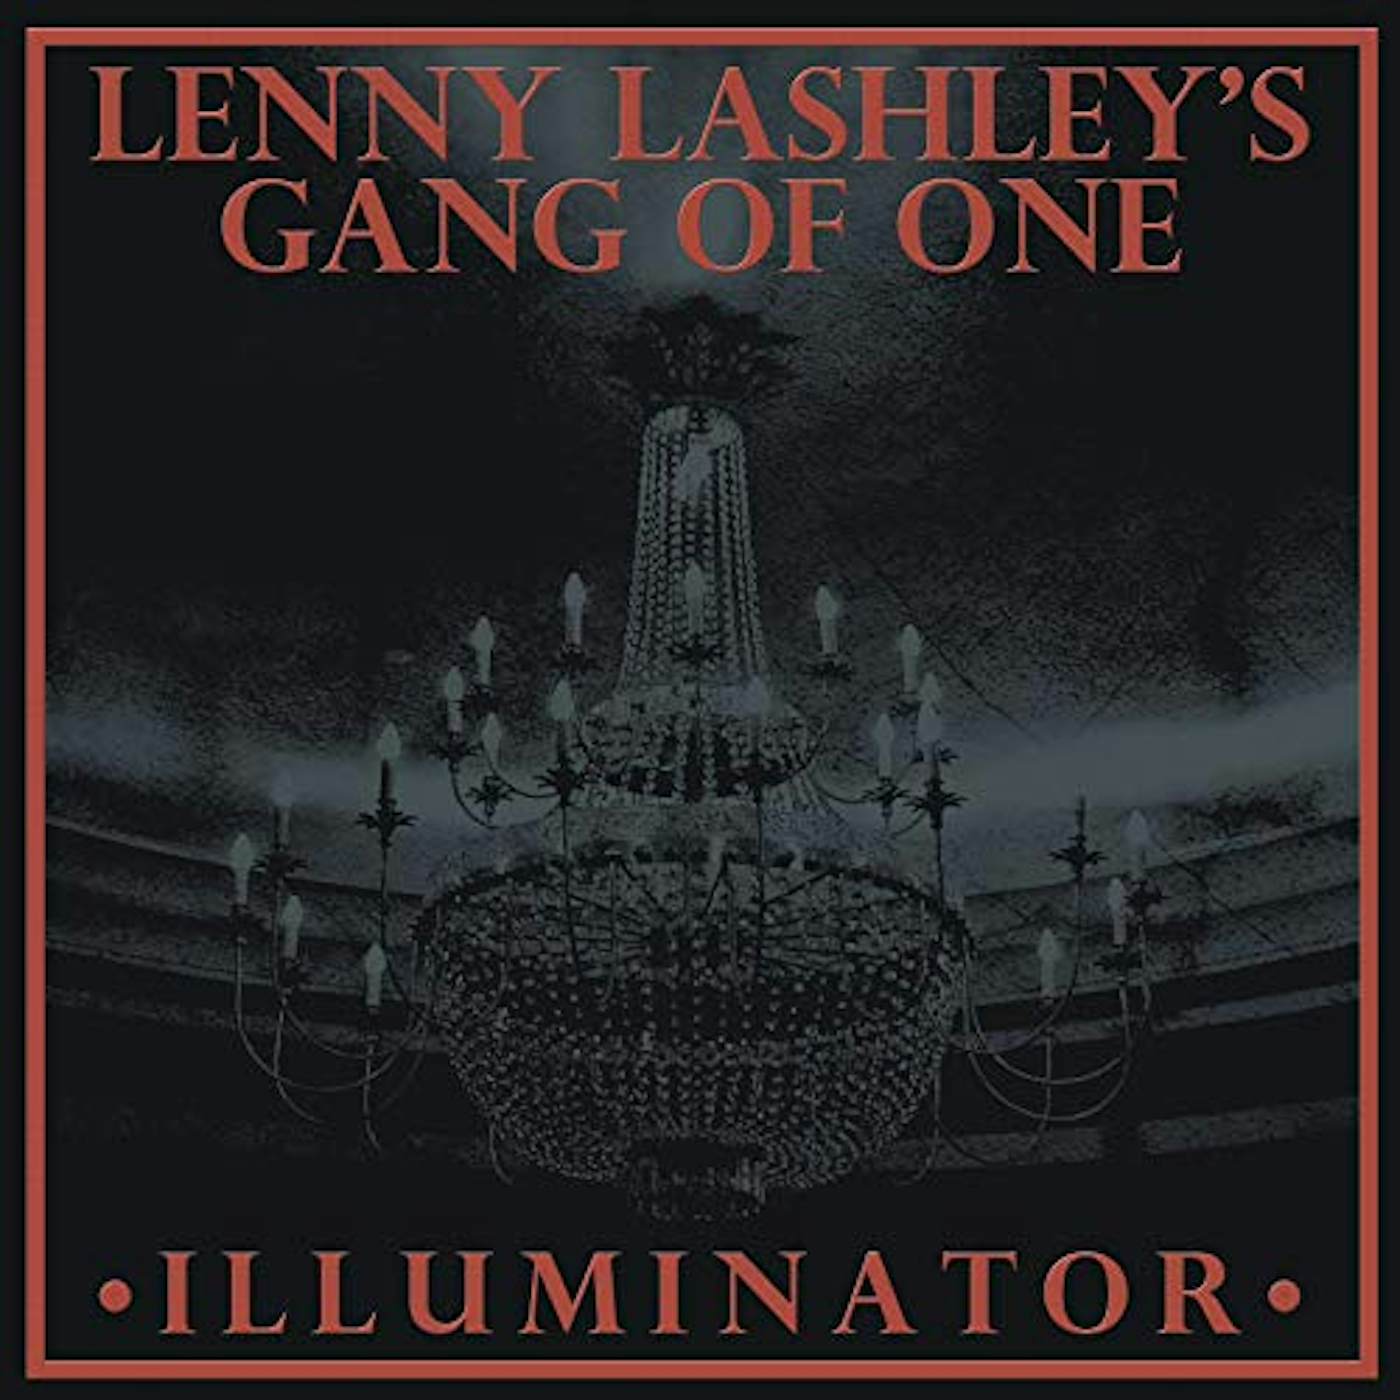 Lenny Lashley's Gang of One ILLUMINATOR CD